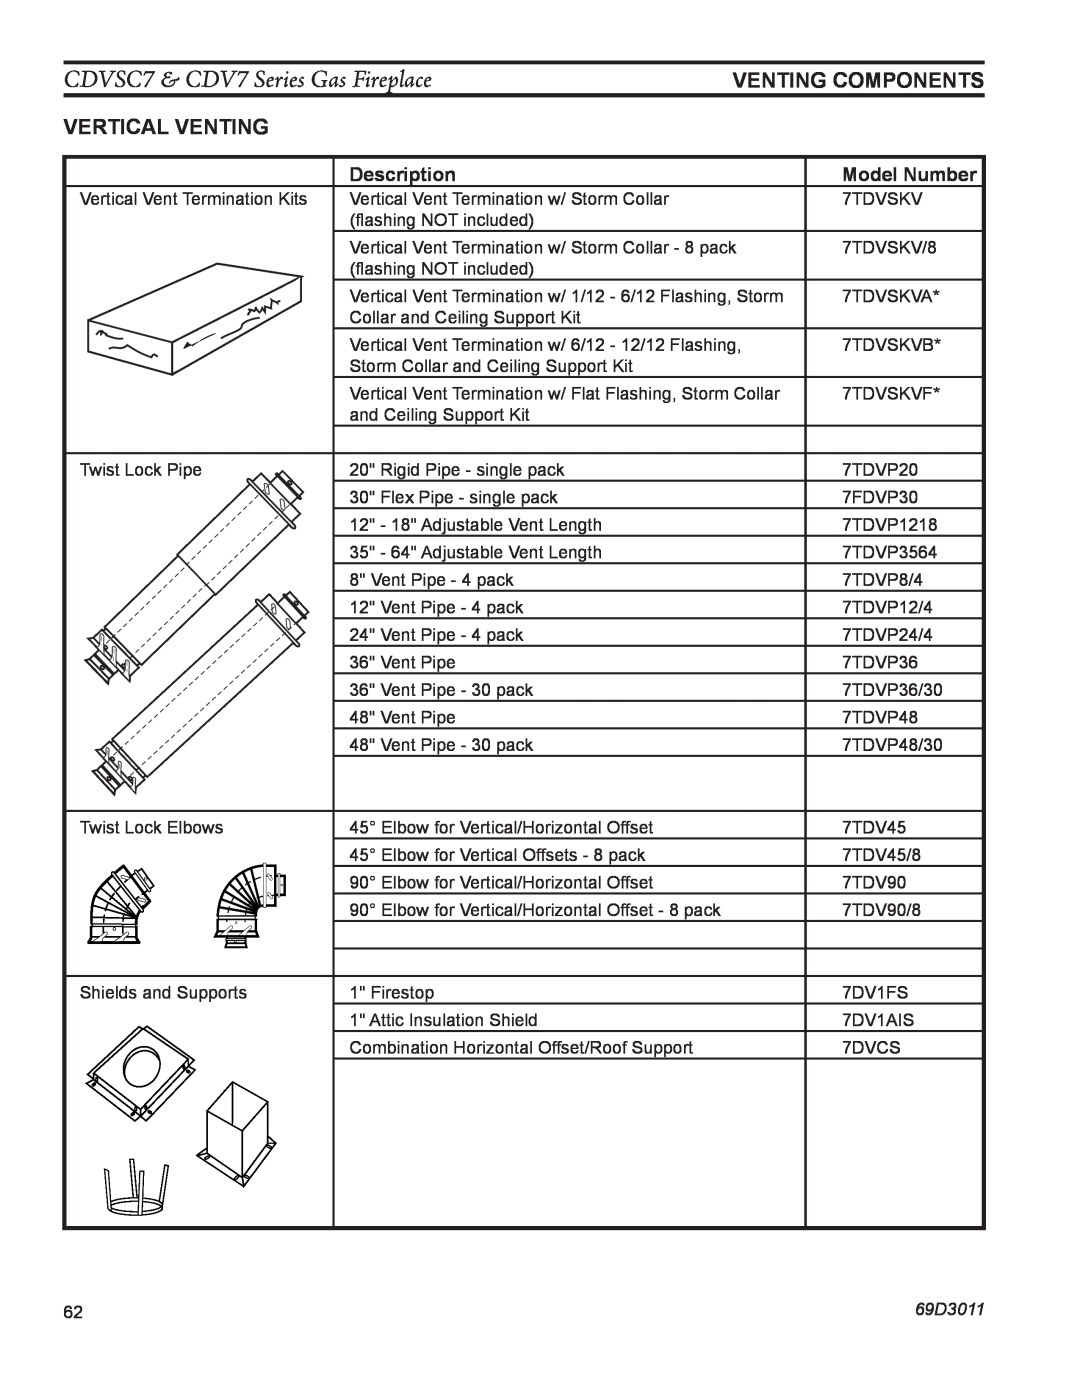 Monessen Hearth Vertical Venting, Venting Components, Description, Model Number, CDVSC7 & CDV7 Series Gas Fireplace 